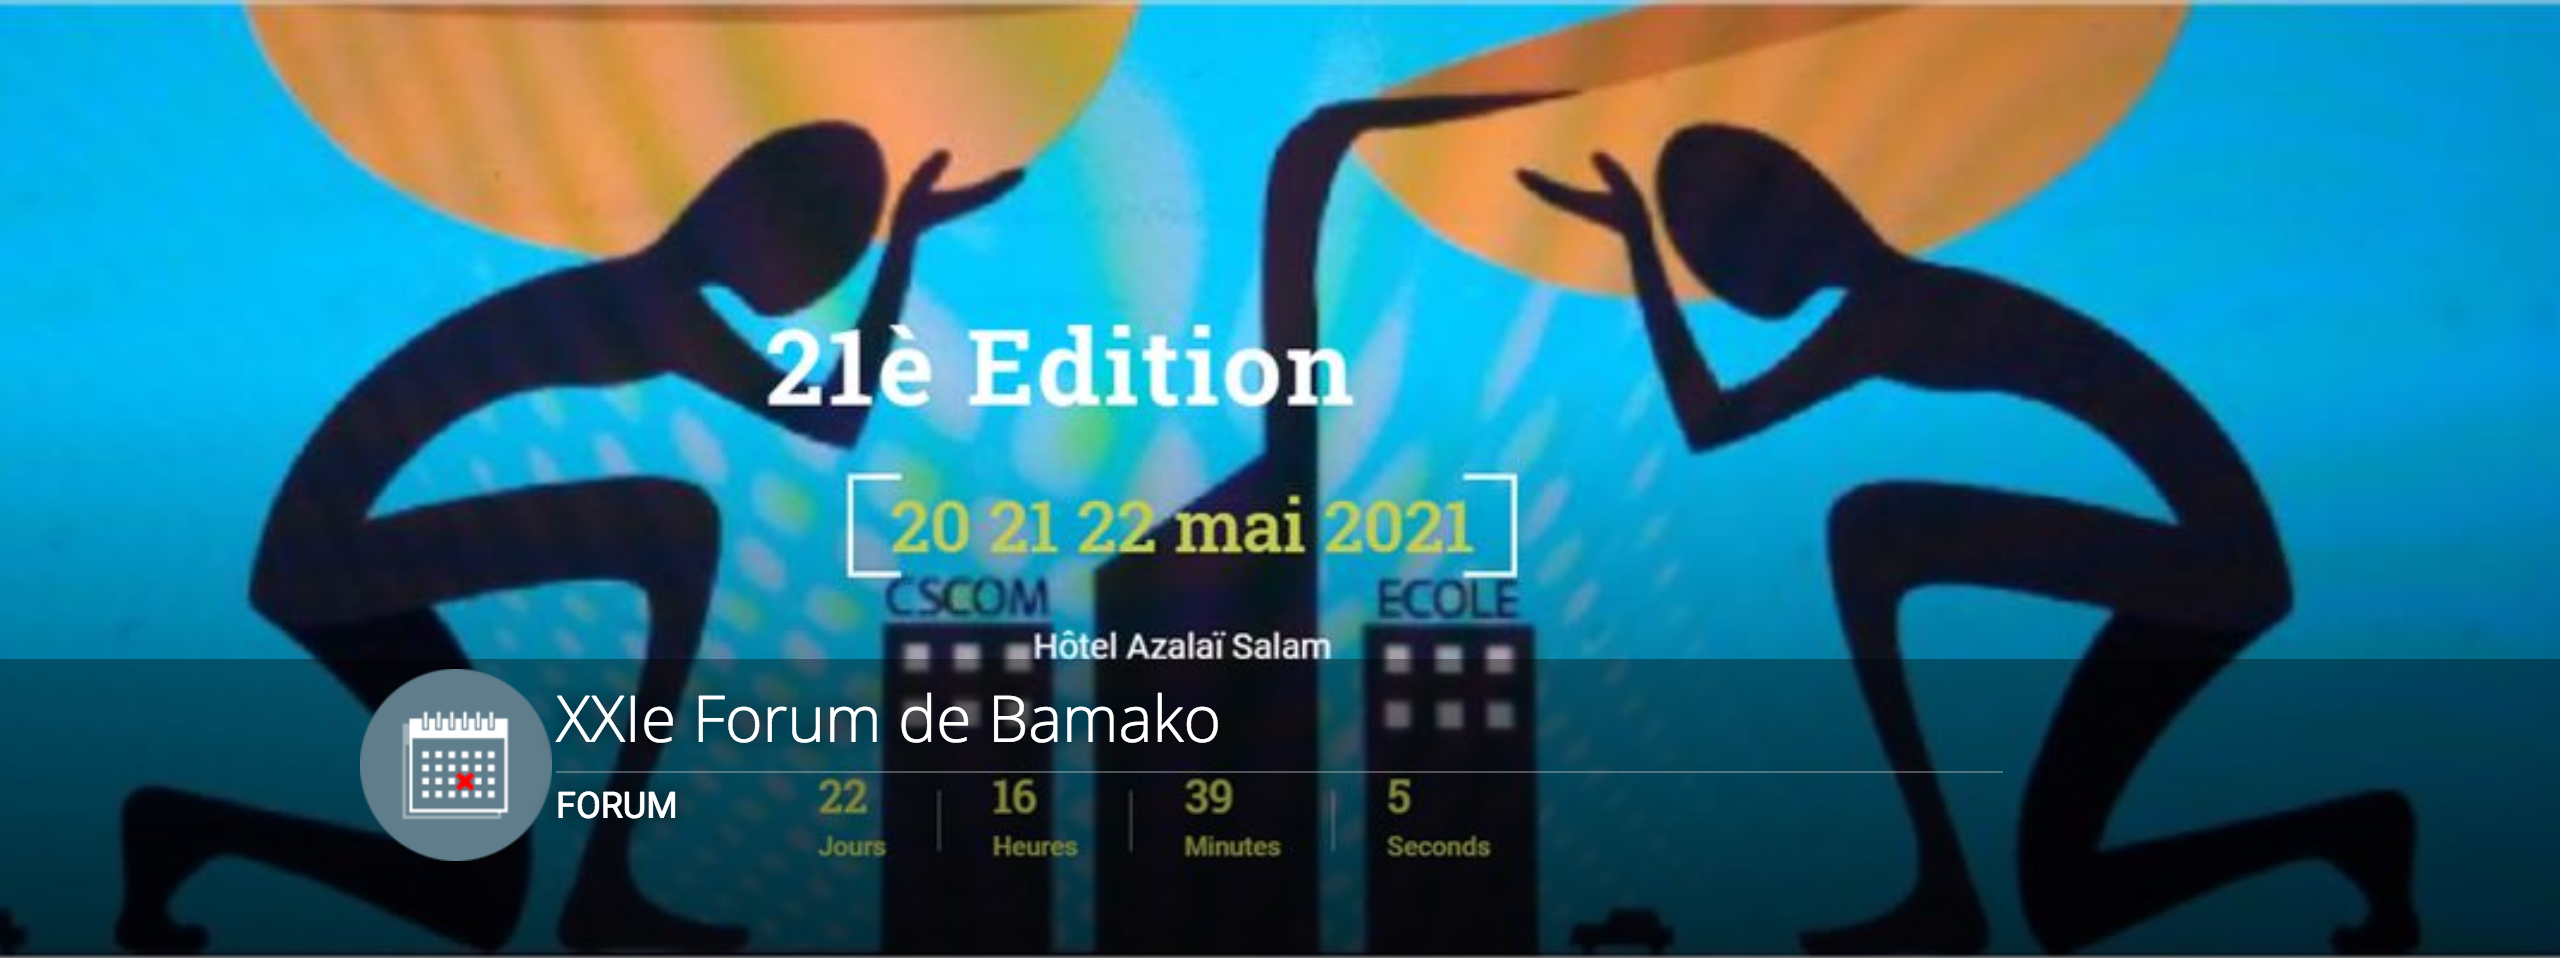 XXIe Forum de Bamako 20 au 22 mai 2021, à l’Hôtel Azalaï Salam